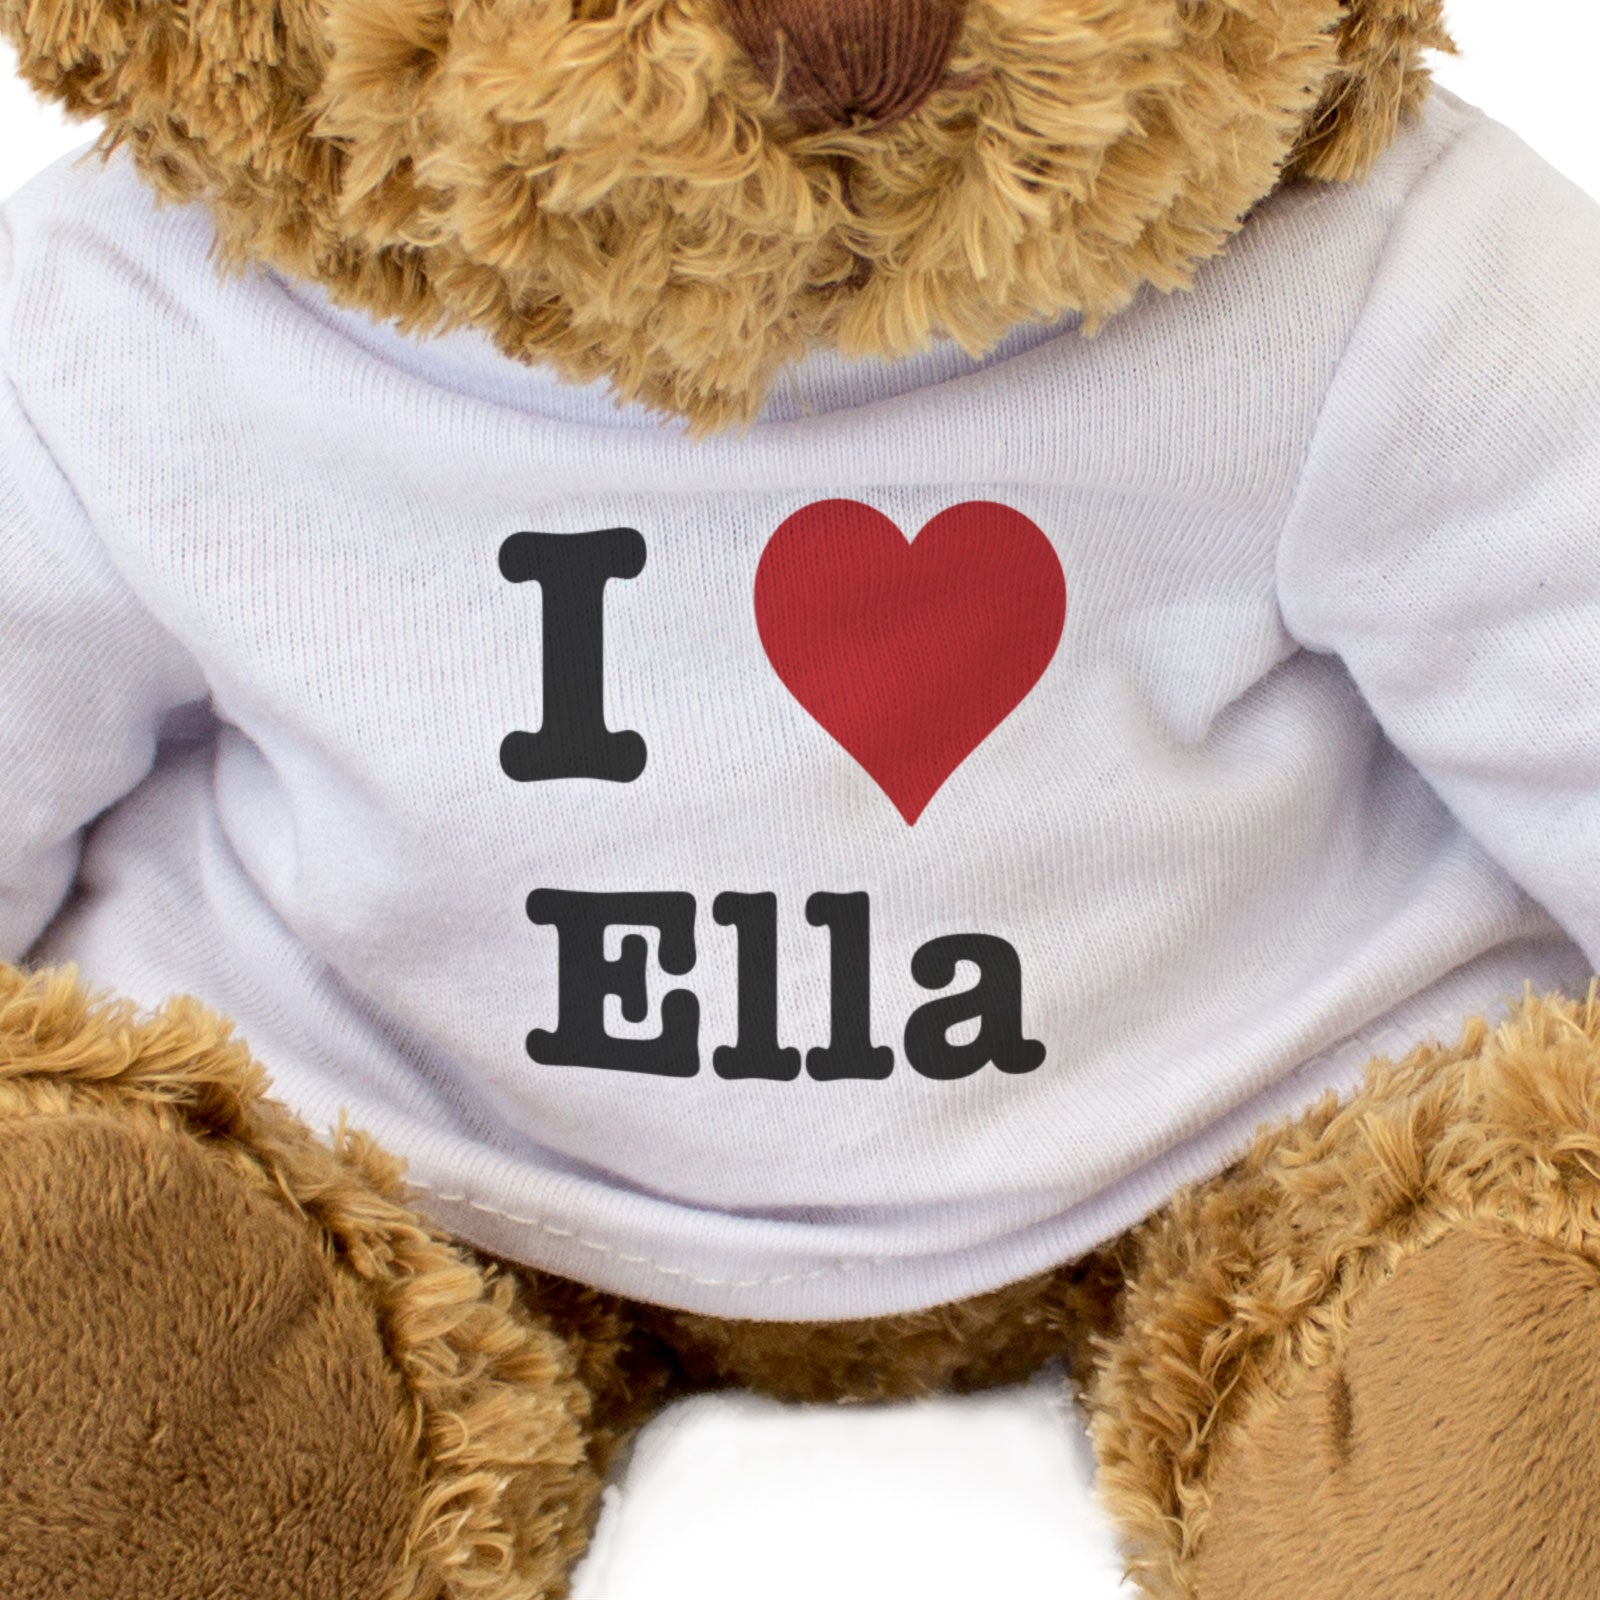 I Love Ella - Teddy Bear